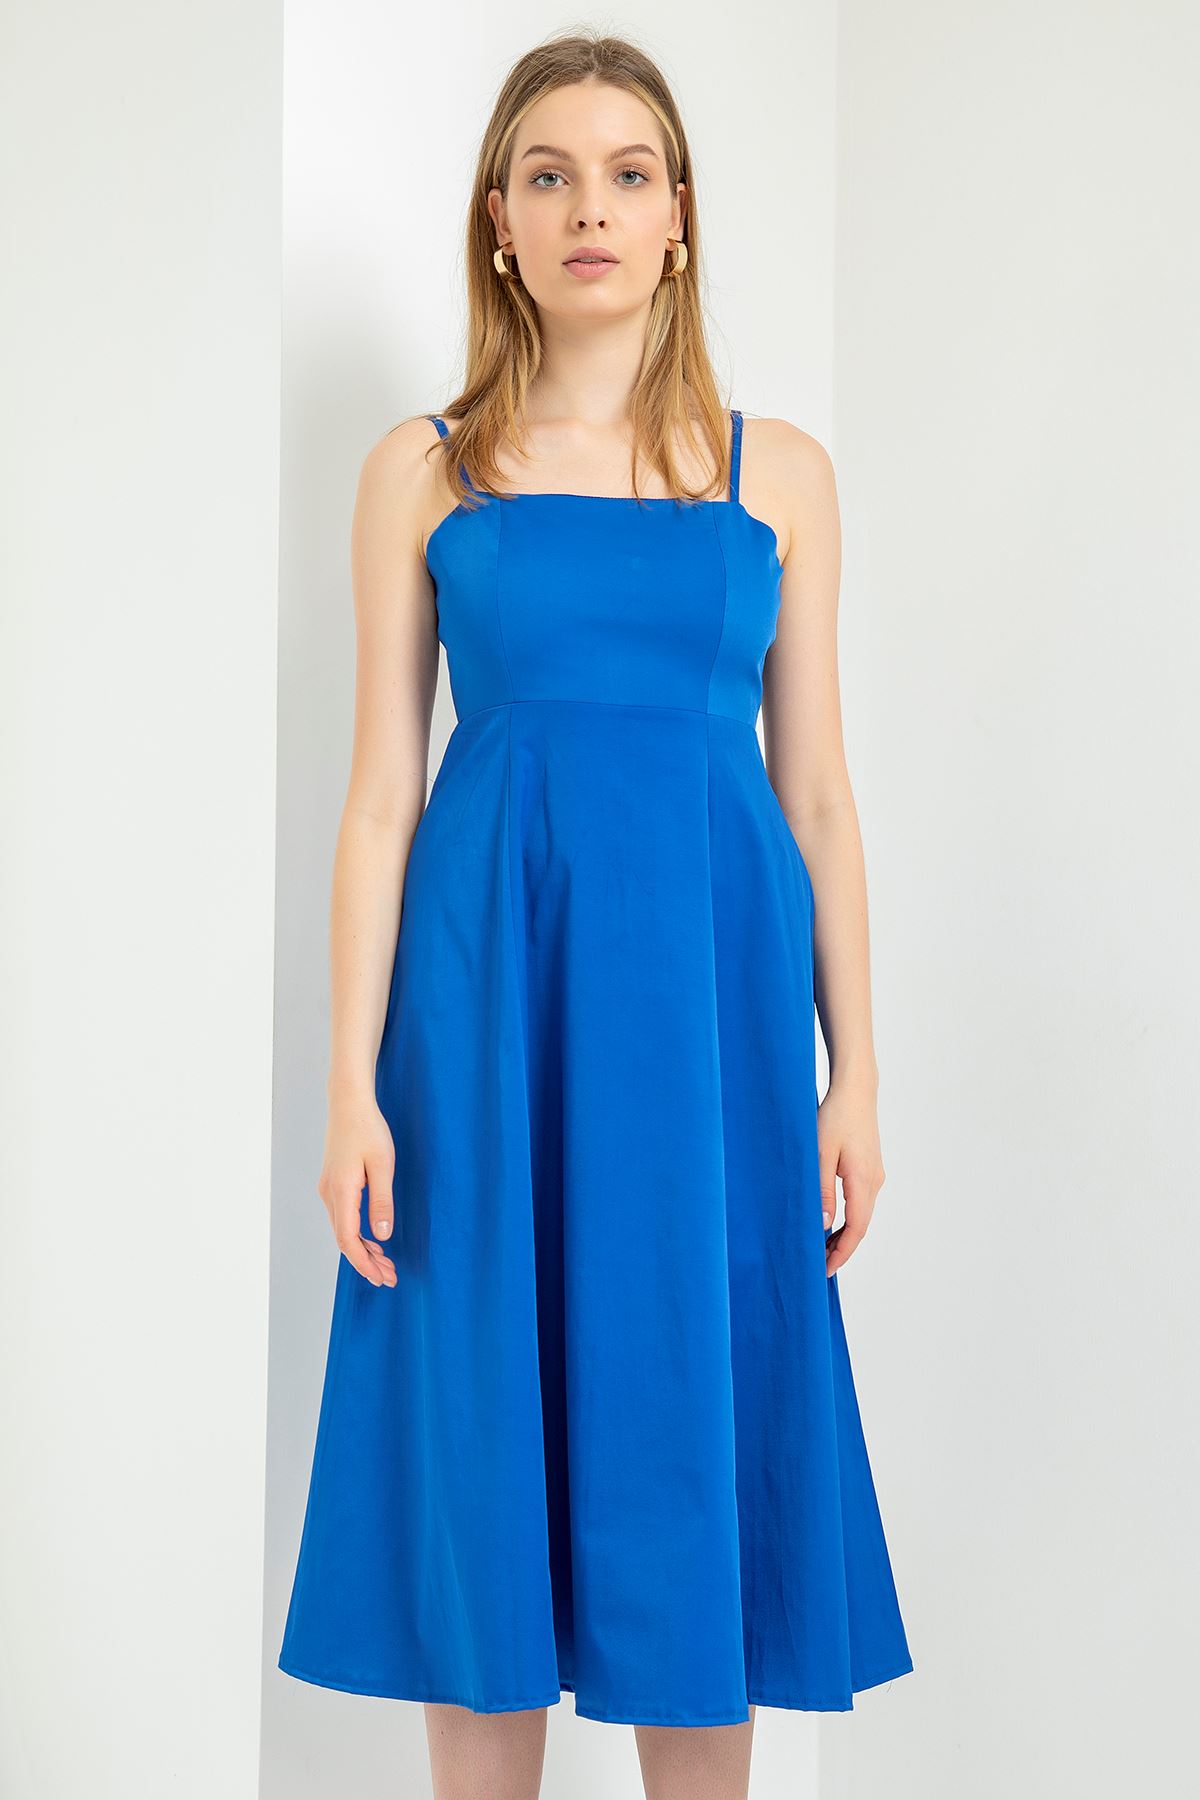 Erika Fabric Sleeveless Spaghetti Strap Midi A Cut Women Dress - Navy Blue 